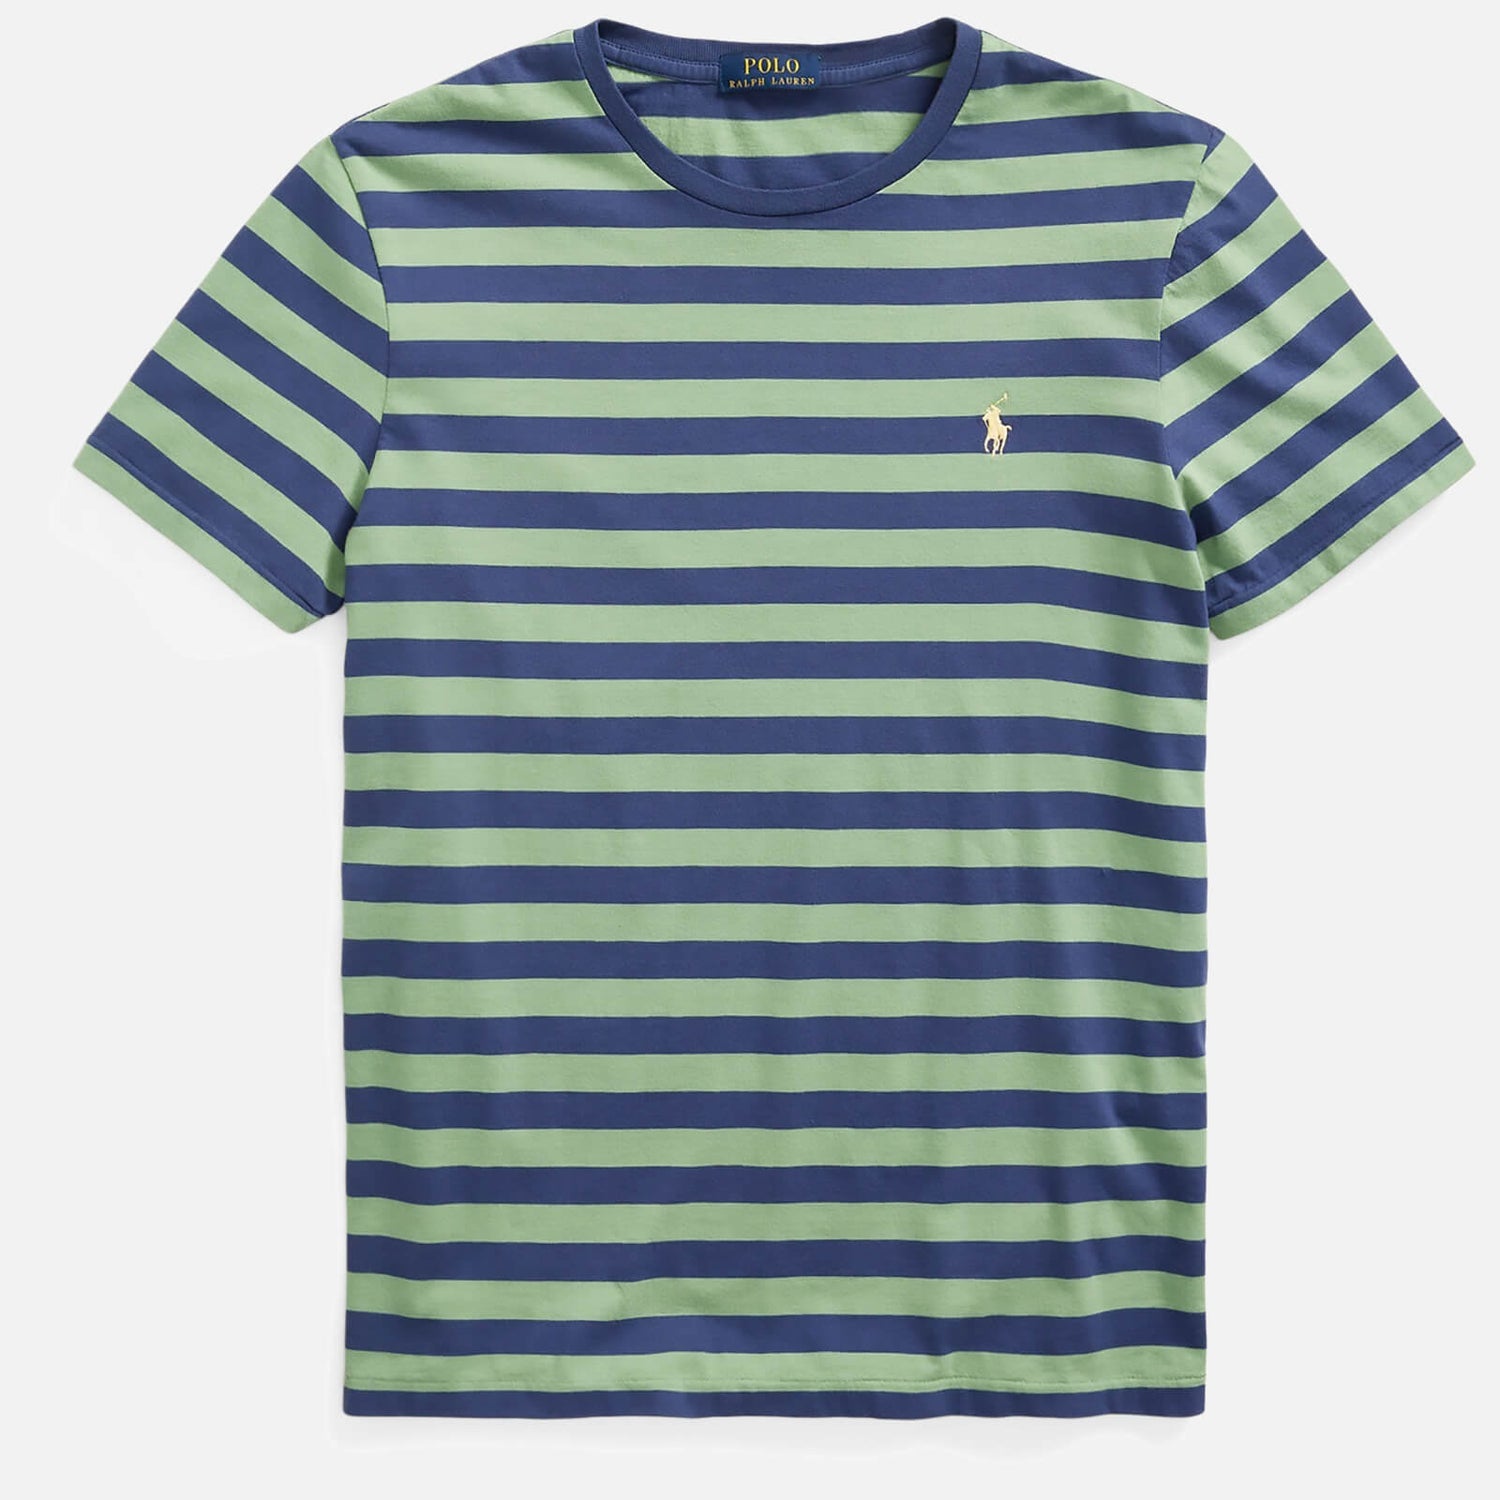 Polo Ralph Lauren Men's Custom Slim Fit Jersey Striped T-Shirt - Outback Green/Light Navy - S